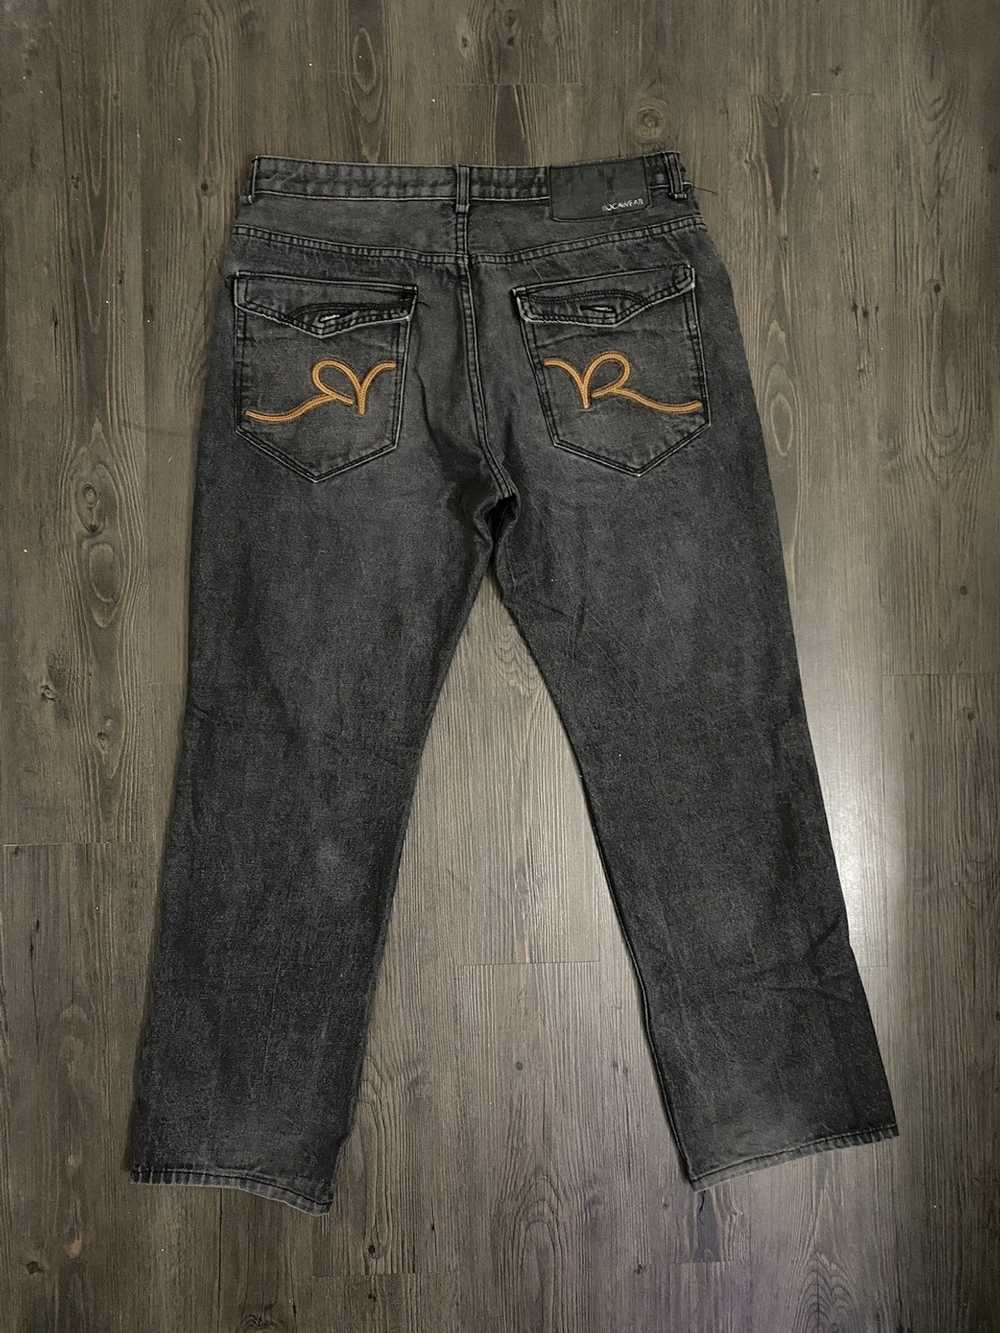 Rocawear Vintage Rocawear Jeans - image 1